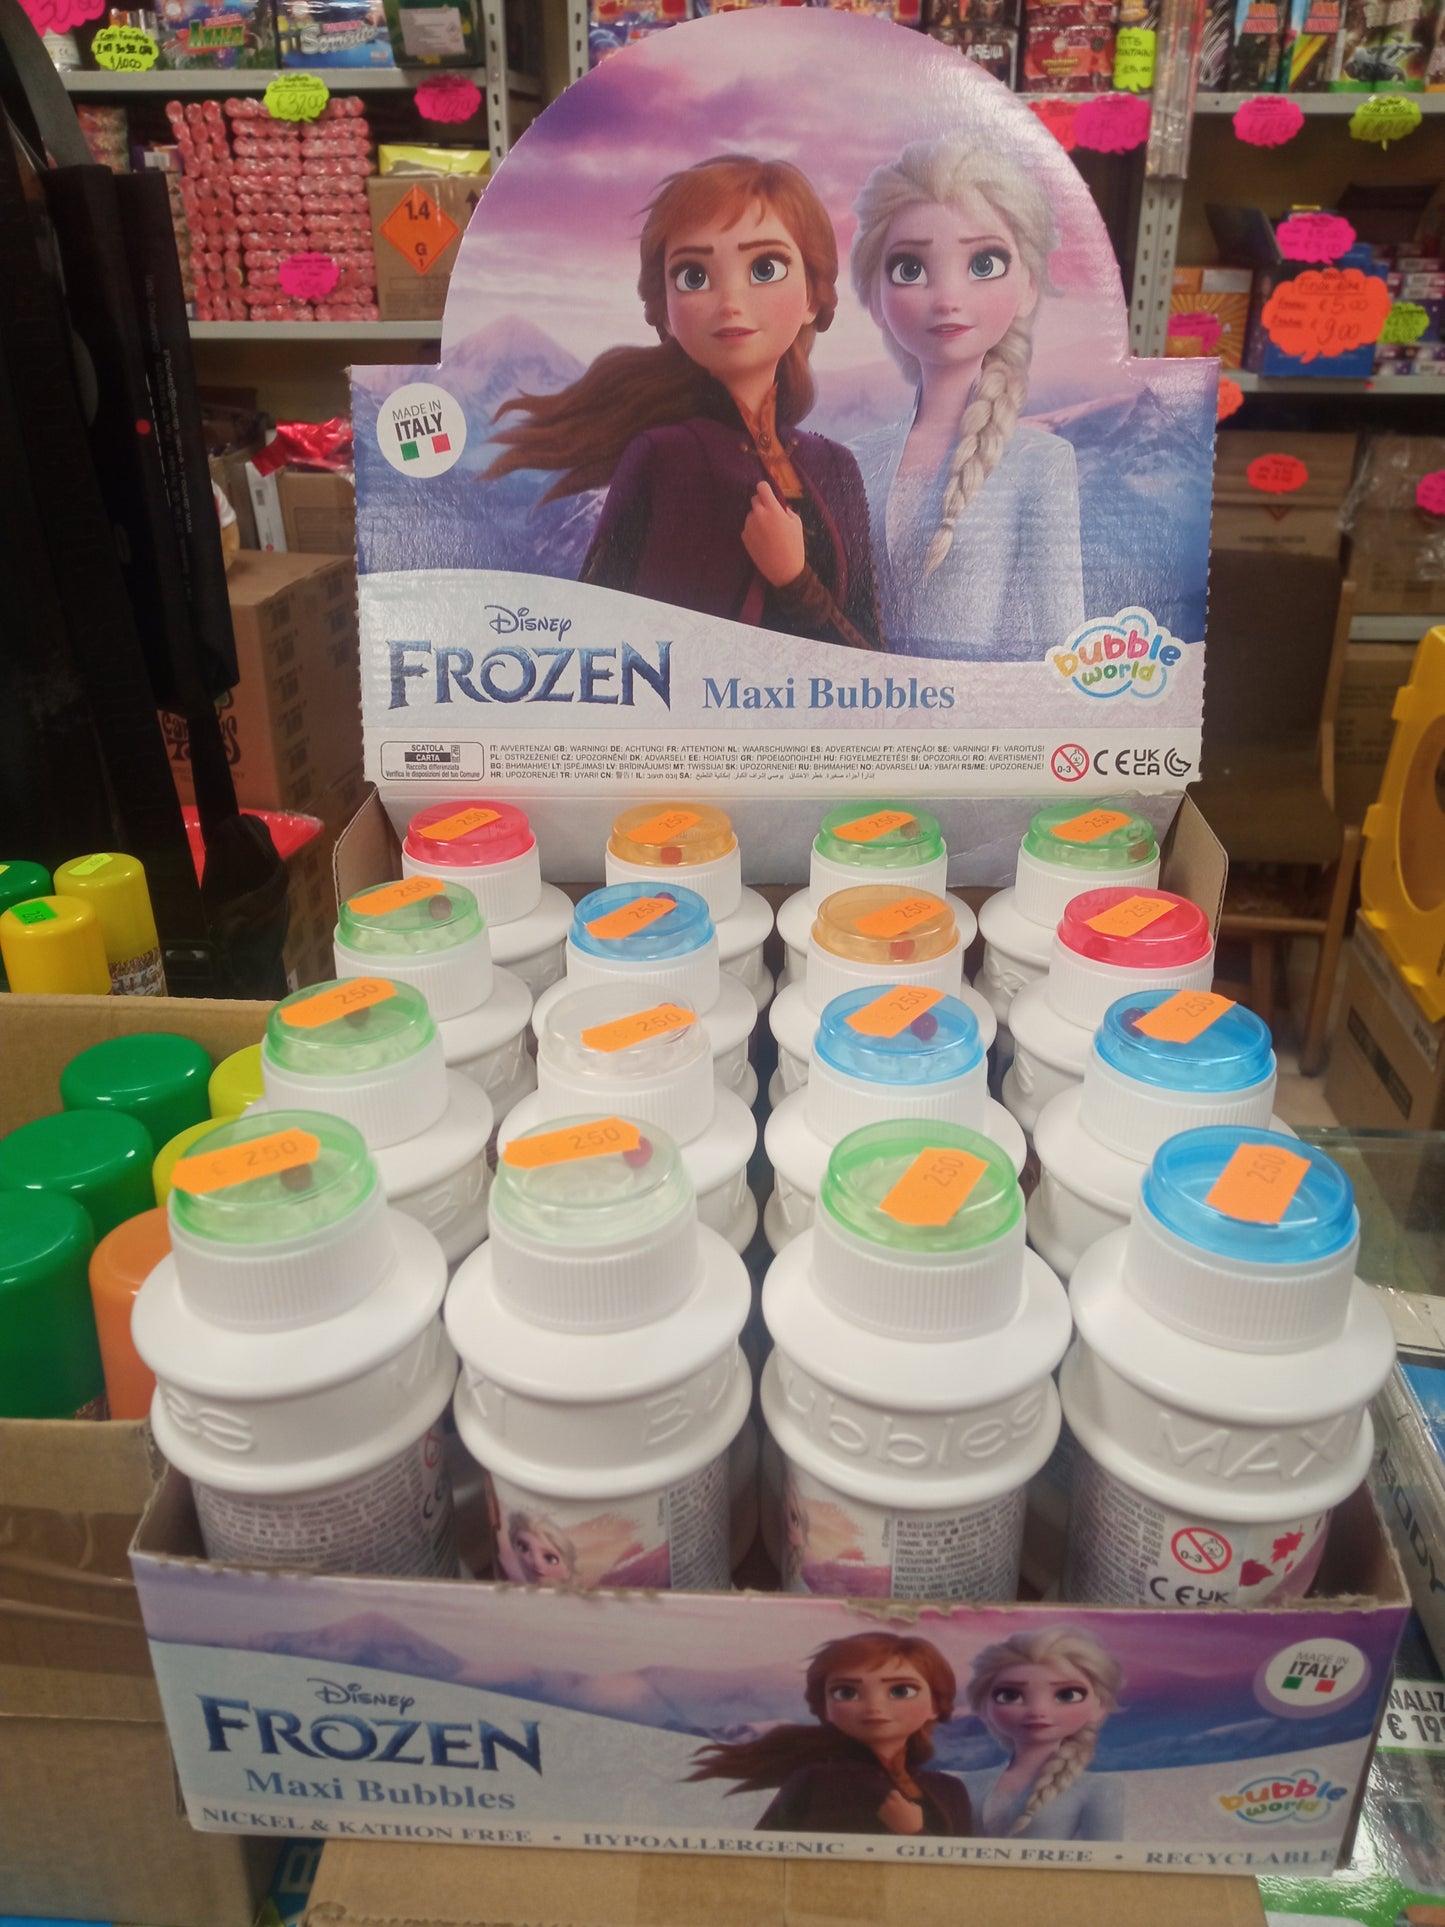 Maxi Bubbles Frozen Disney